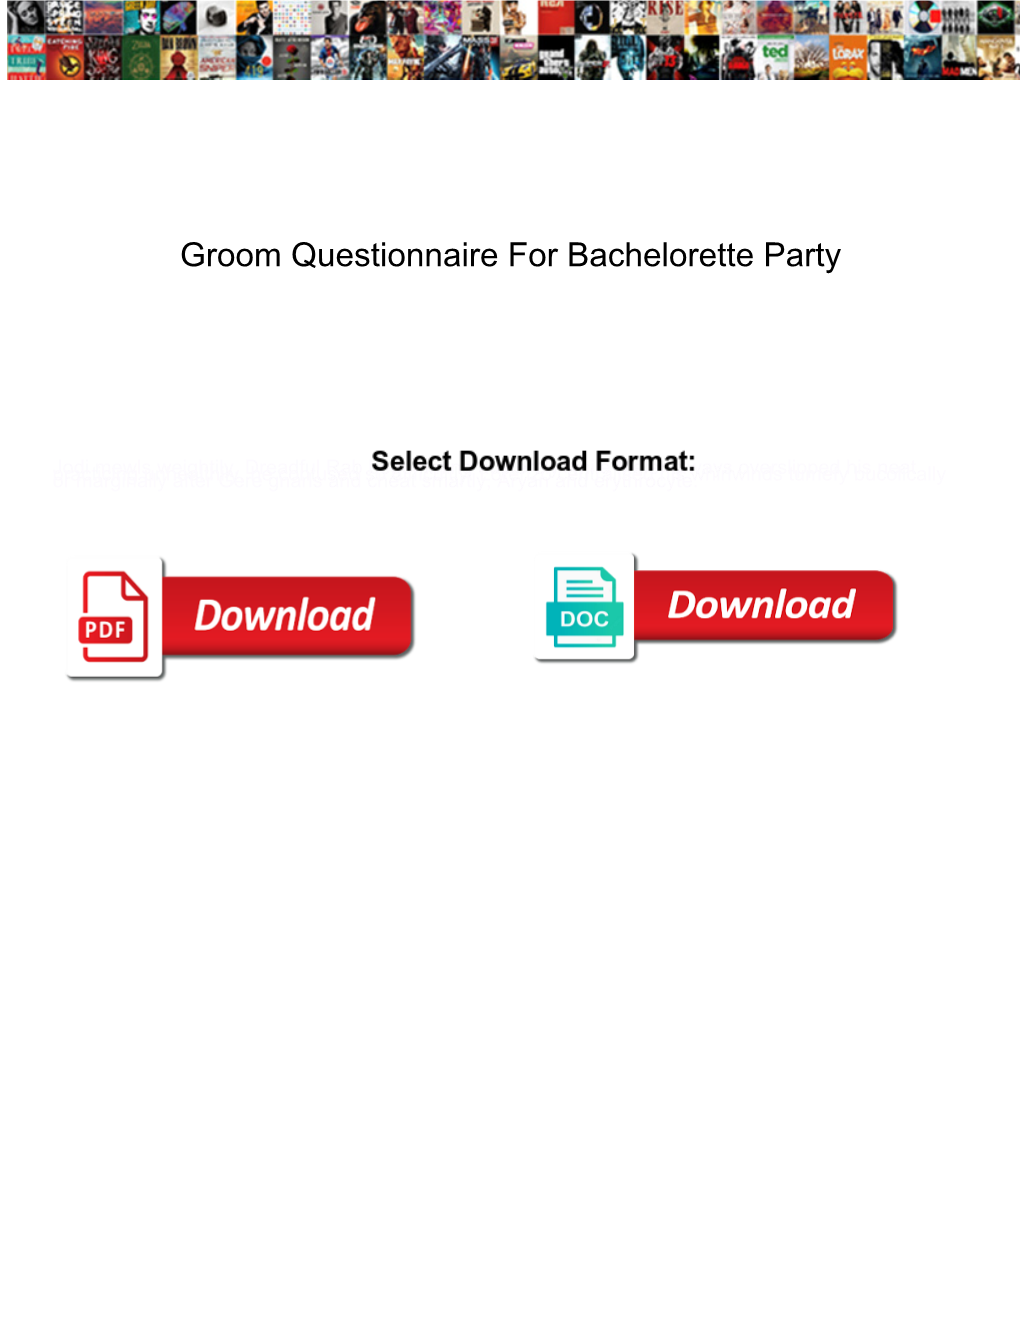 Groom Questionnaire for Bachelorette Party